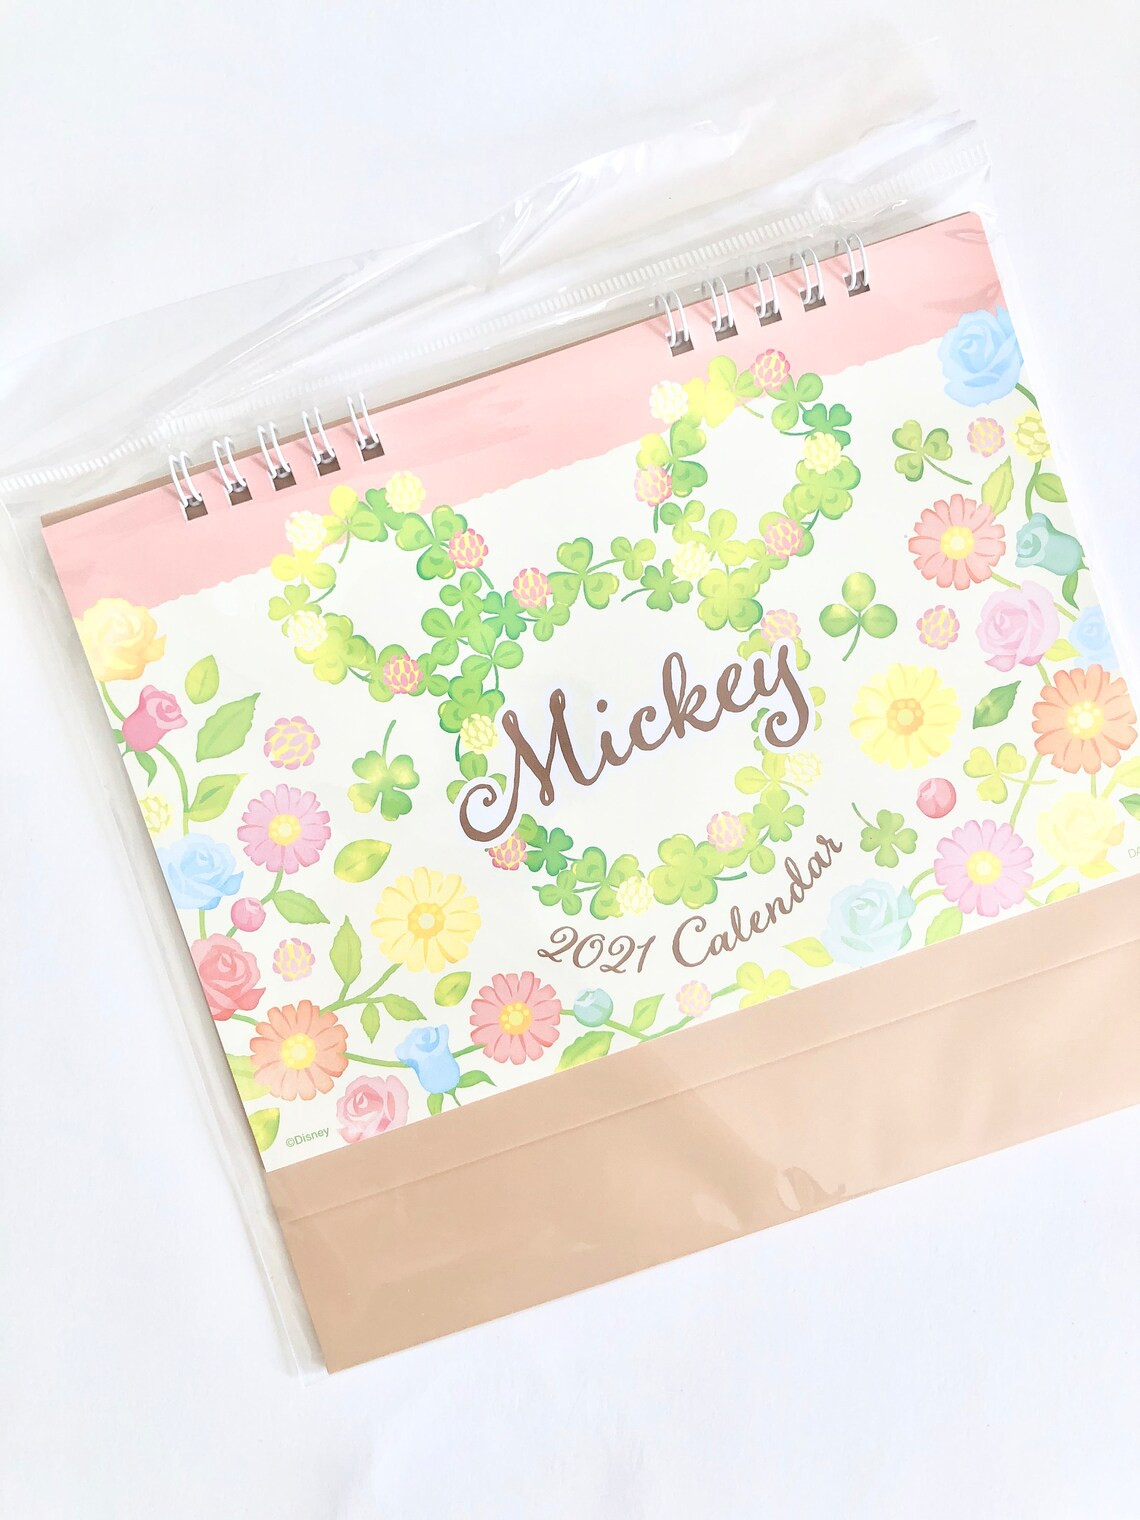 2021 Mickey Mouse Desk Calendar Flower Calendar Disney | Etsy-Free Mickey Muse Calendars 2021